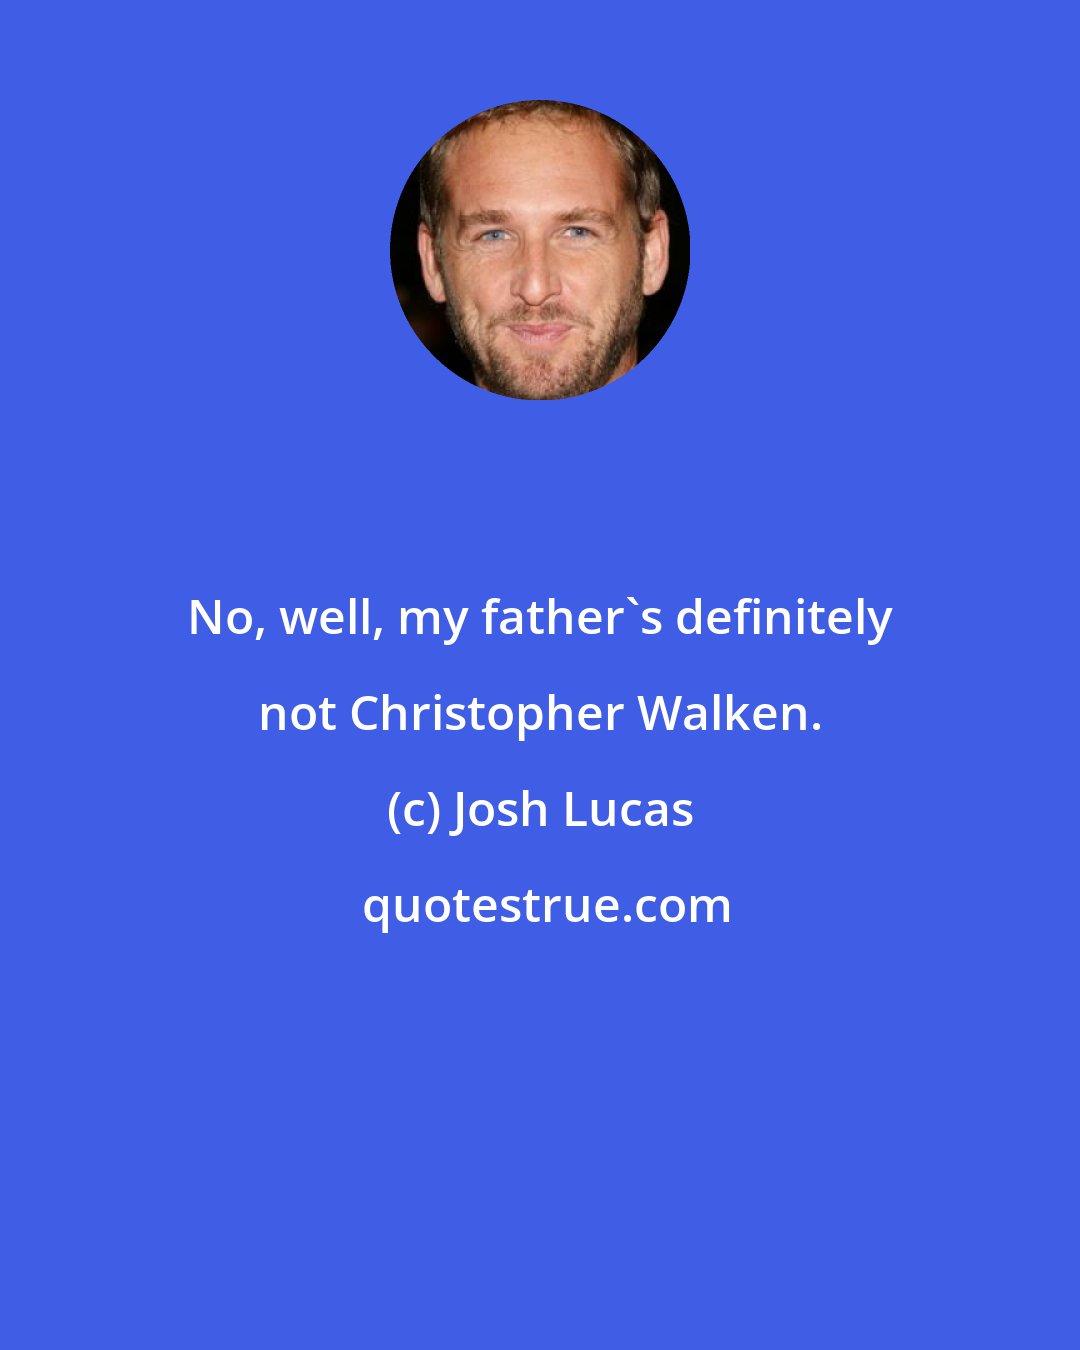 Josh Lucas: No, well, my father's definitely not Christopher Walken.